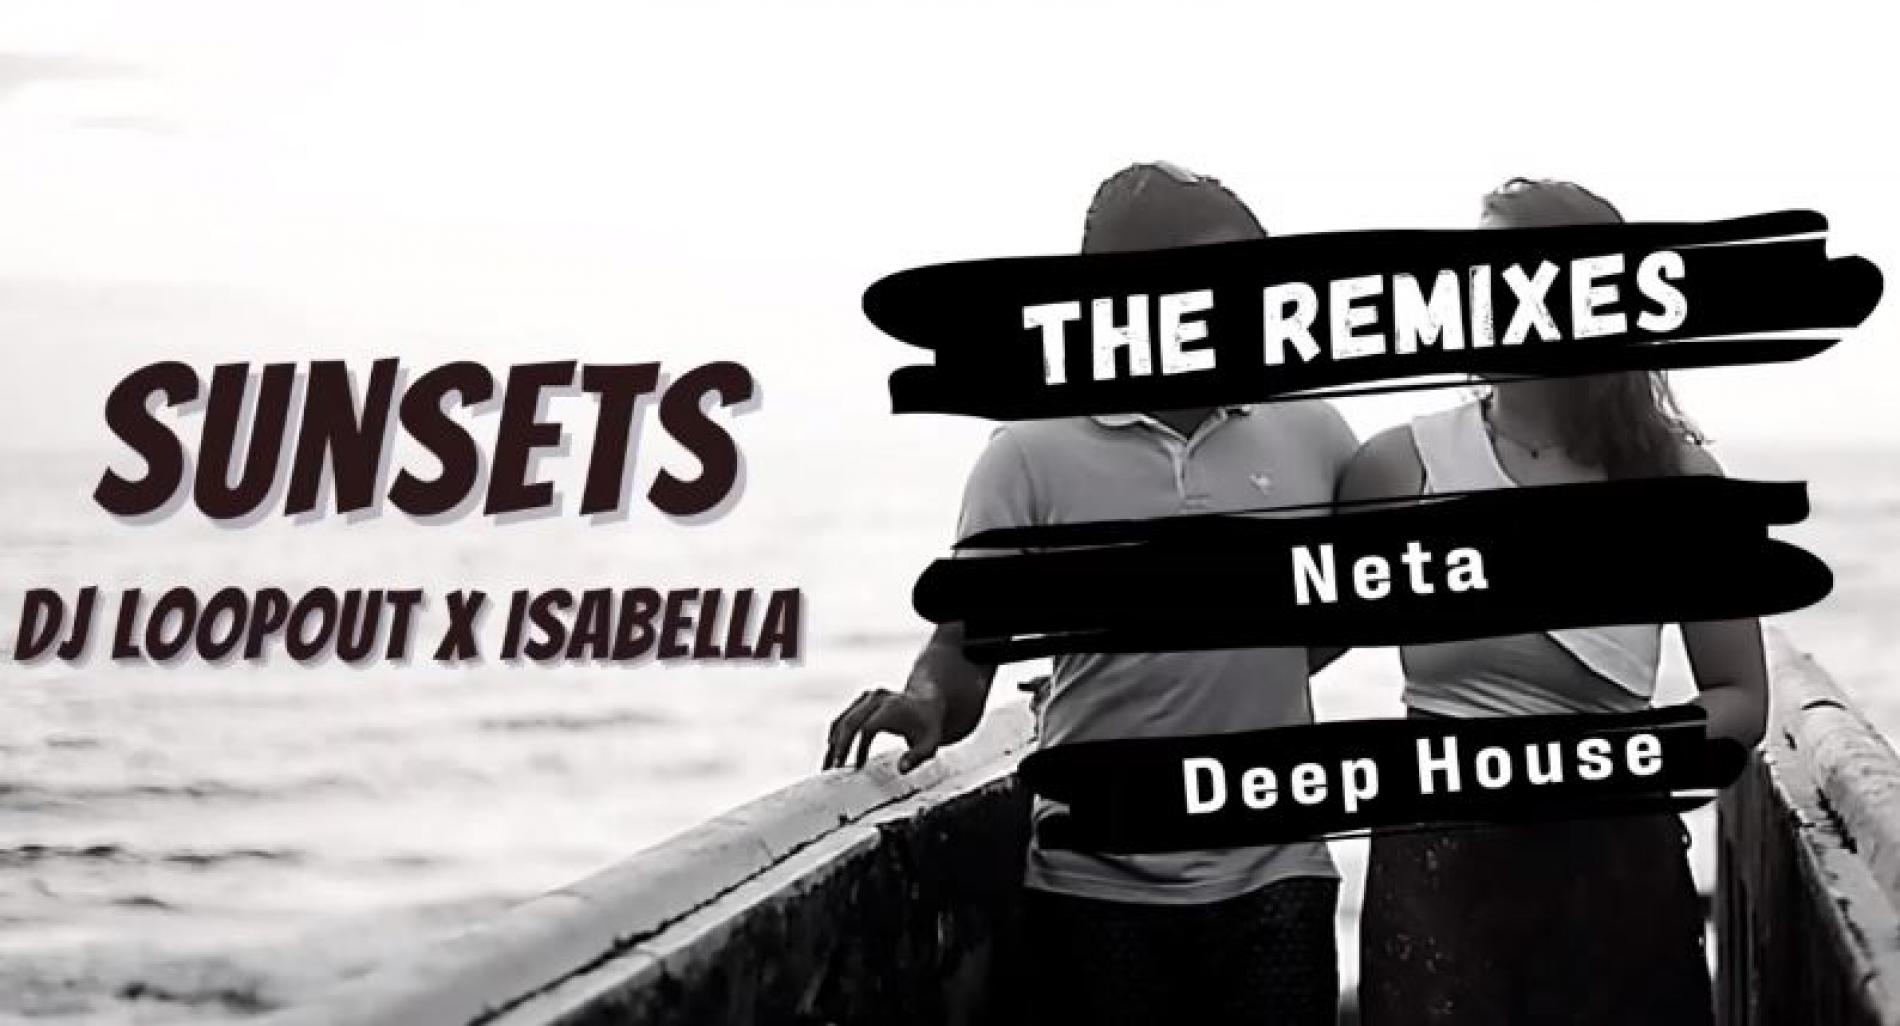 New Music : DJ Loopout ft Isabella – Sunsets (Neta Deep House Remix)